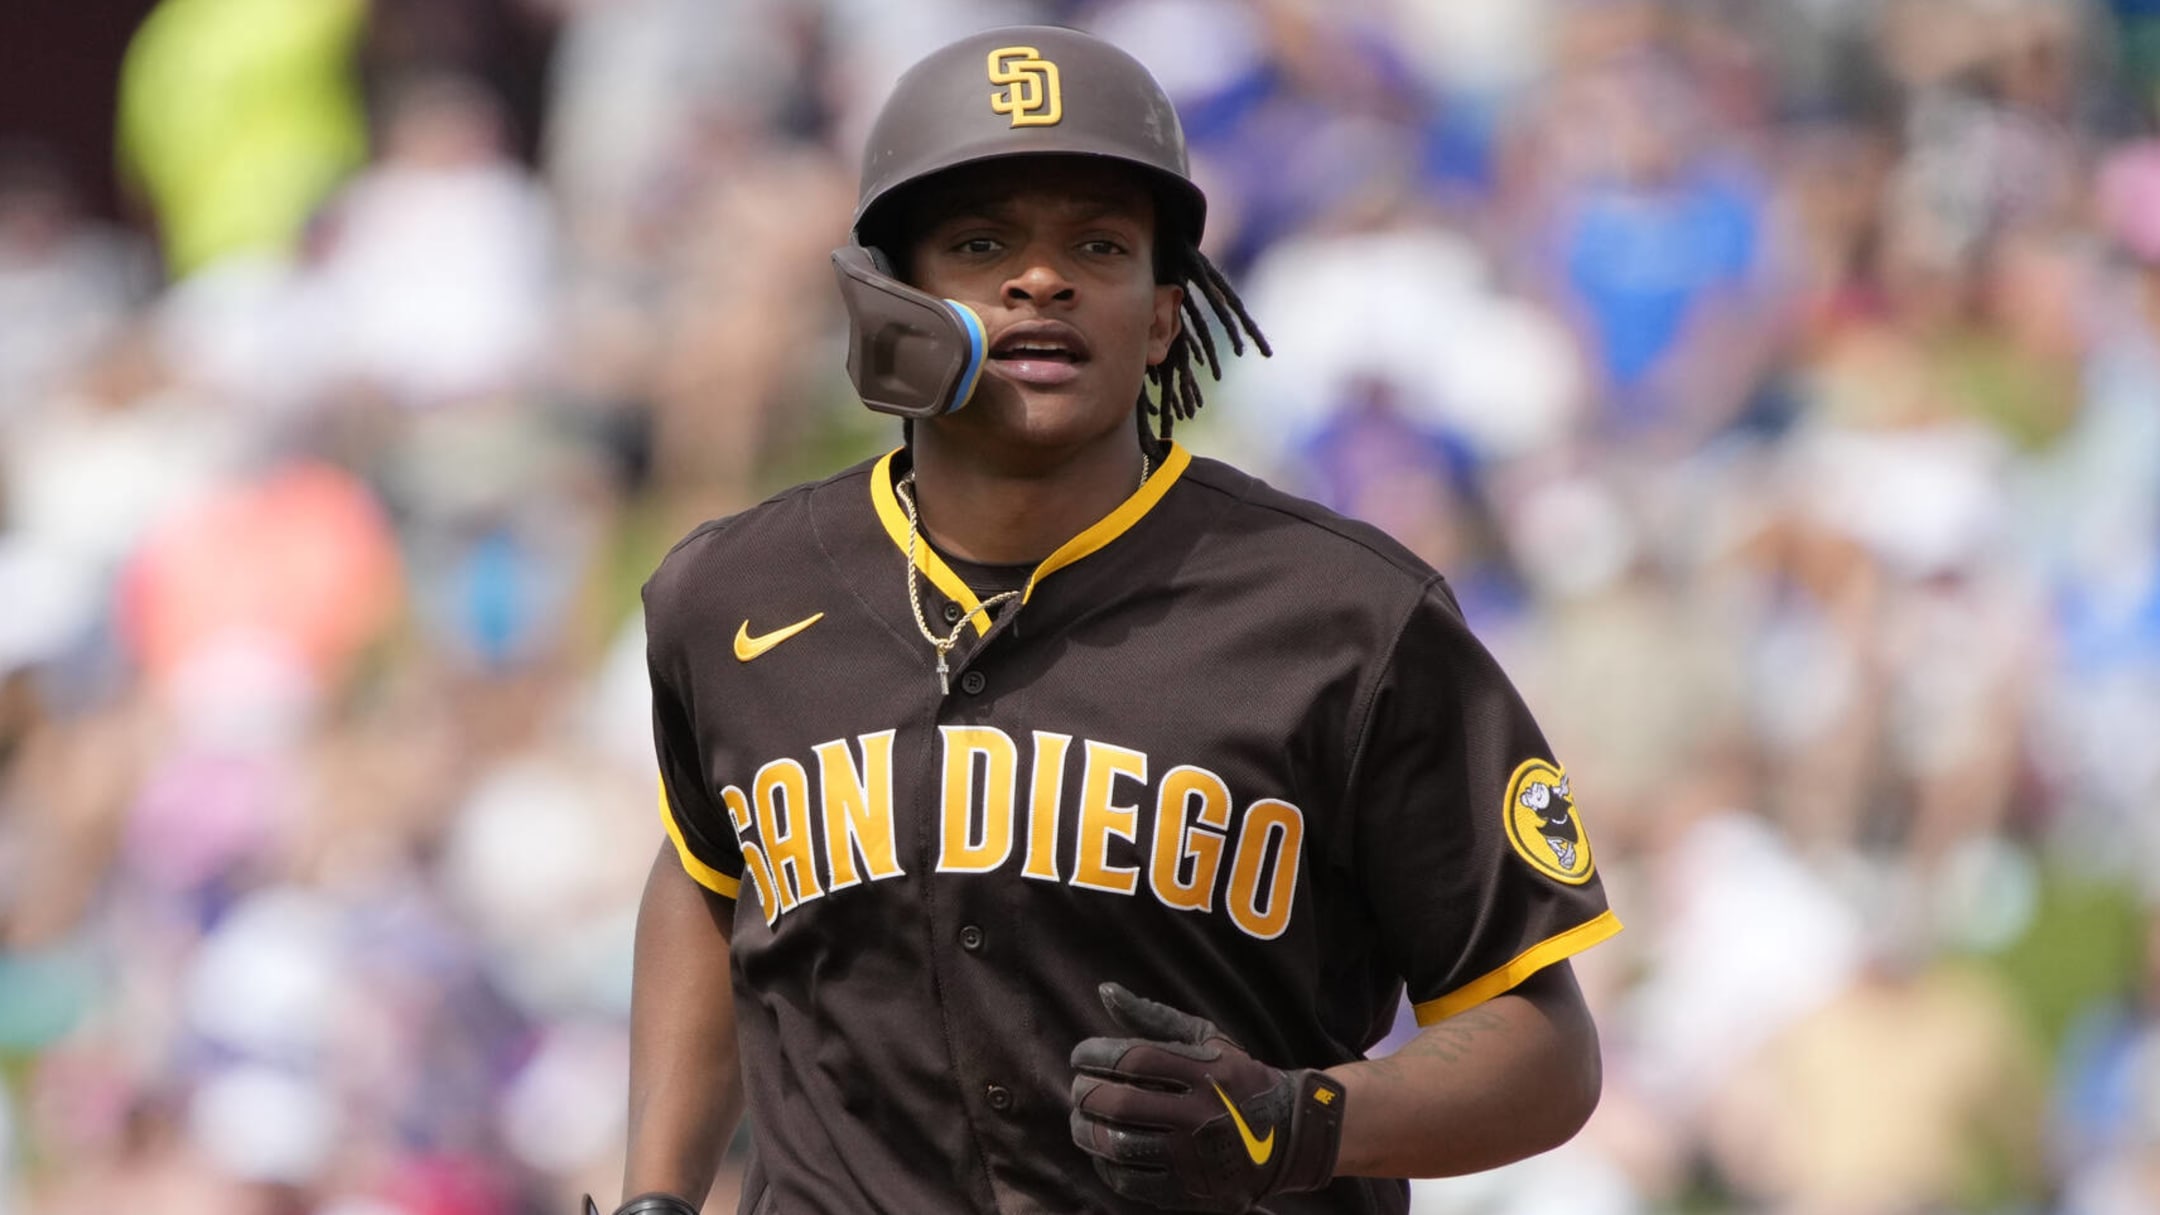 The Padres Fernando Tatis, Jr. tops shortstop prospects ready for 2019 -  Minor League Ball